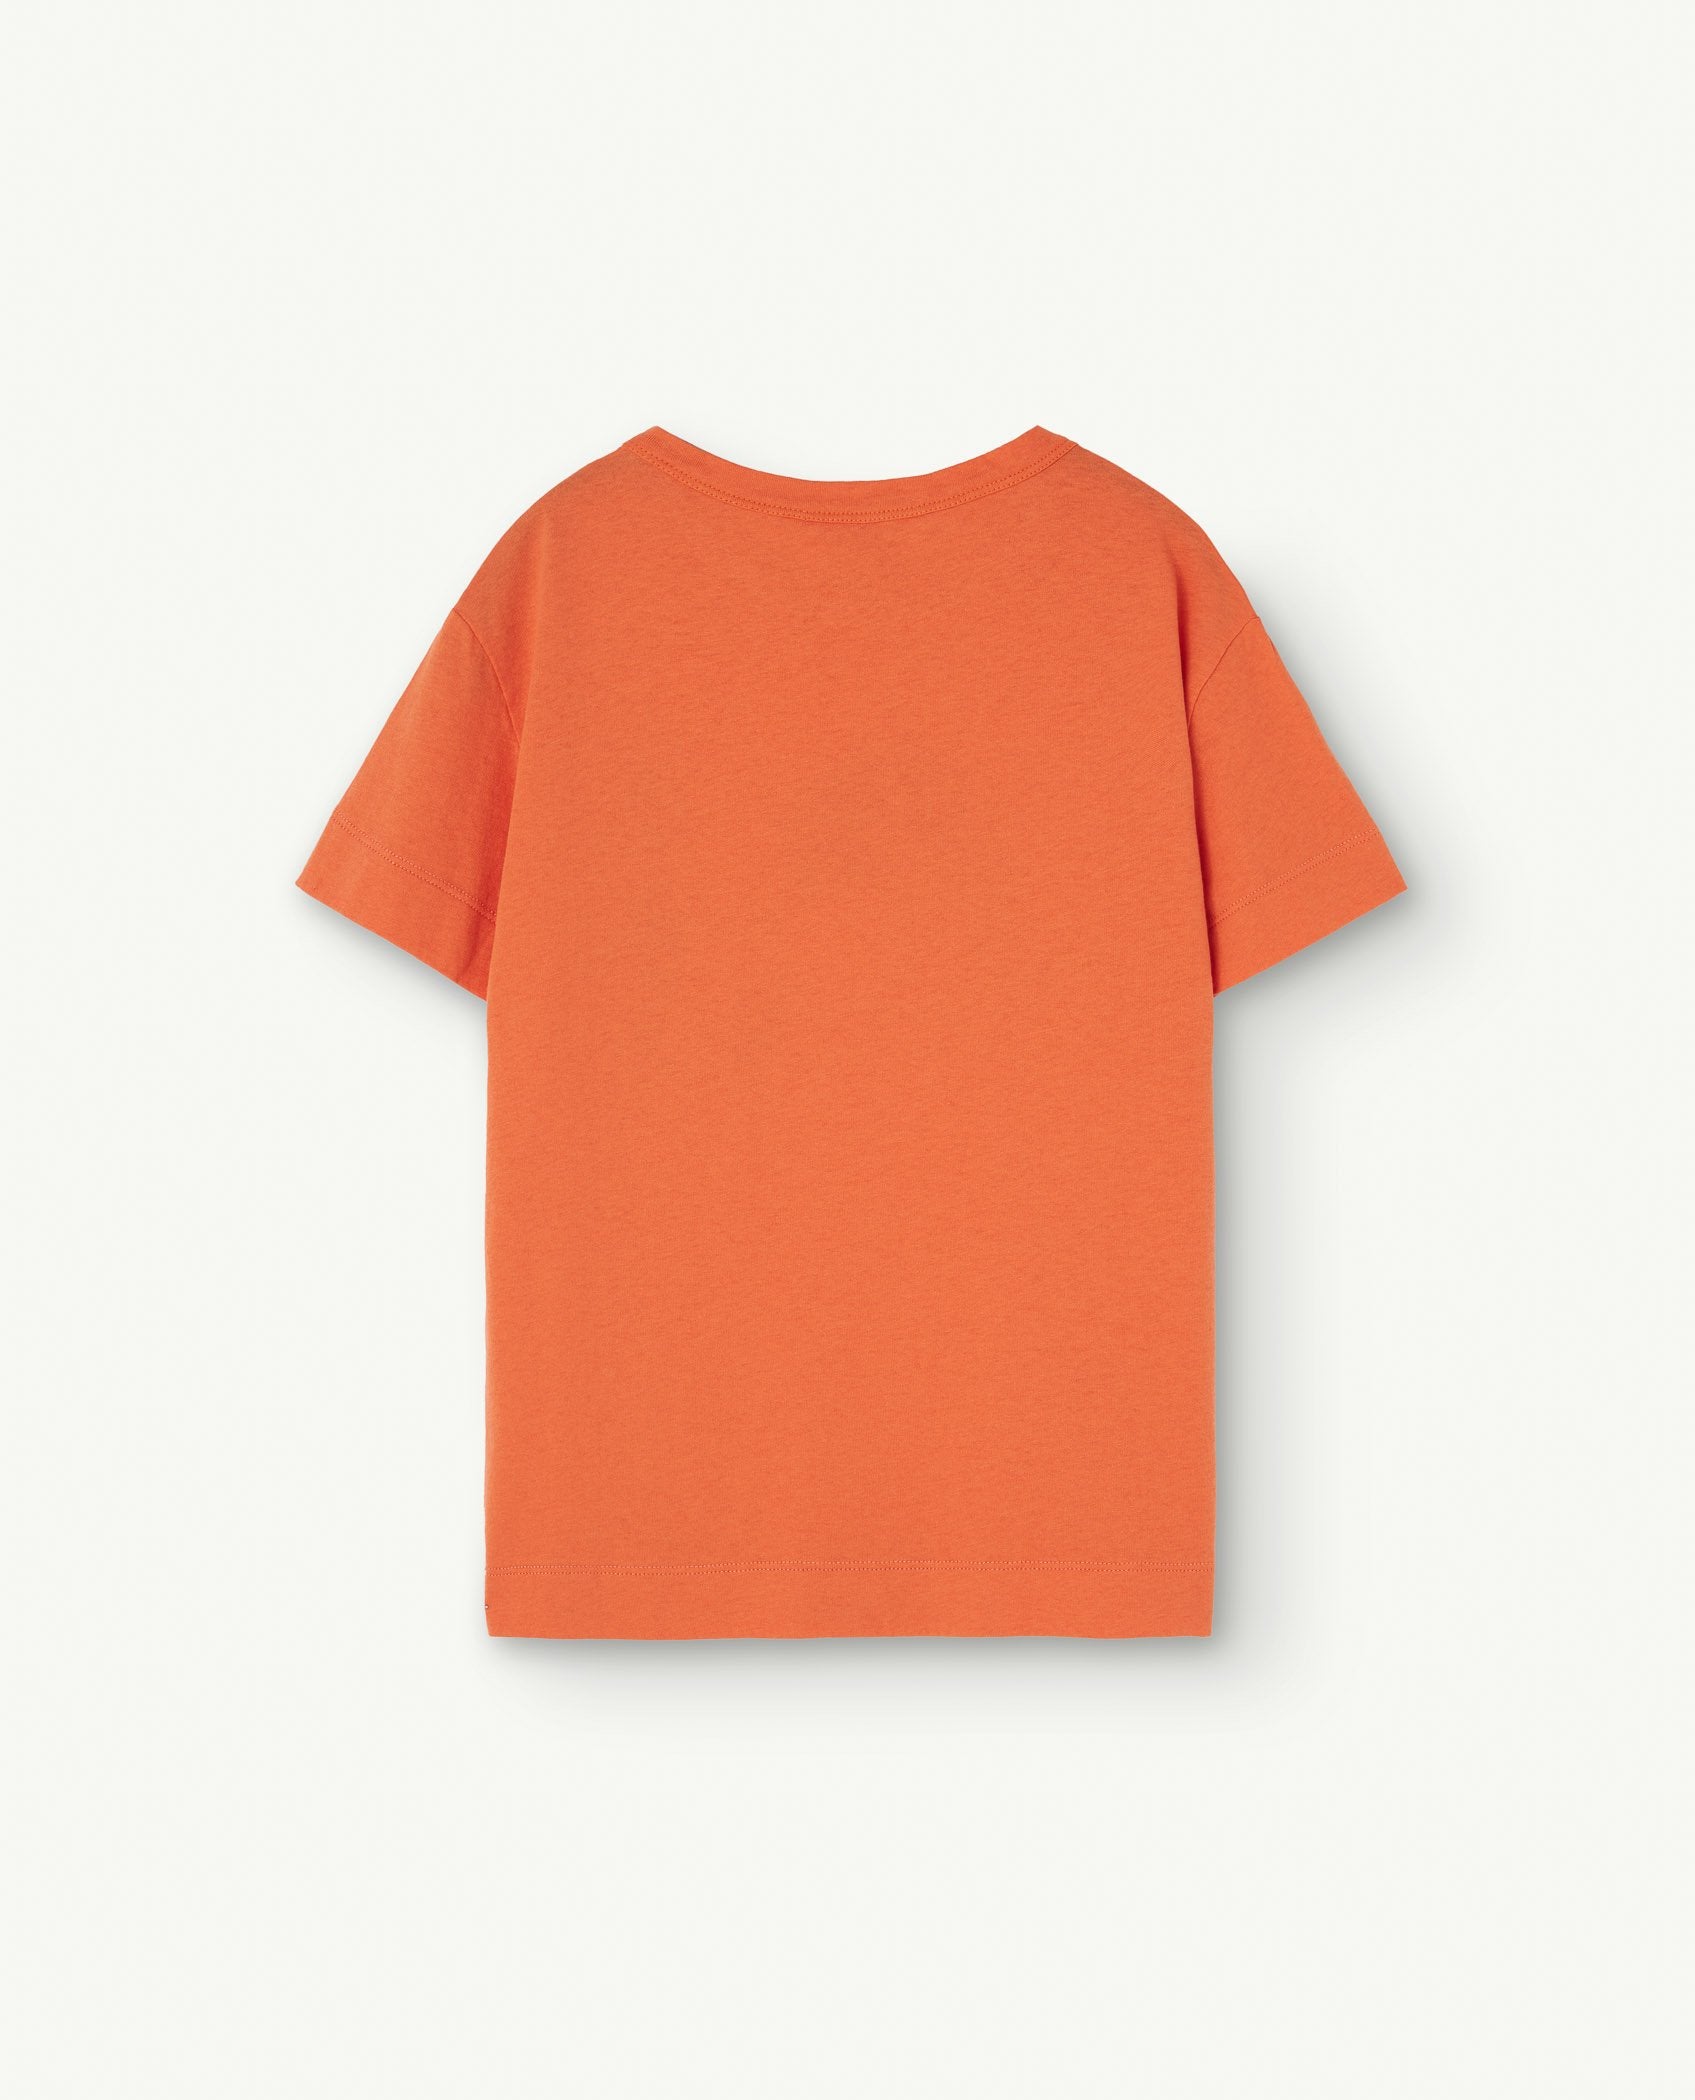 Orange Rooster T-Shirt PRODUCT BACK